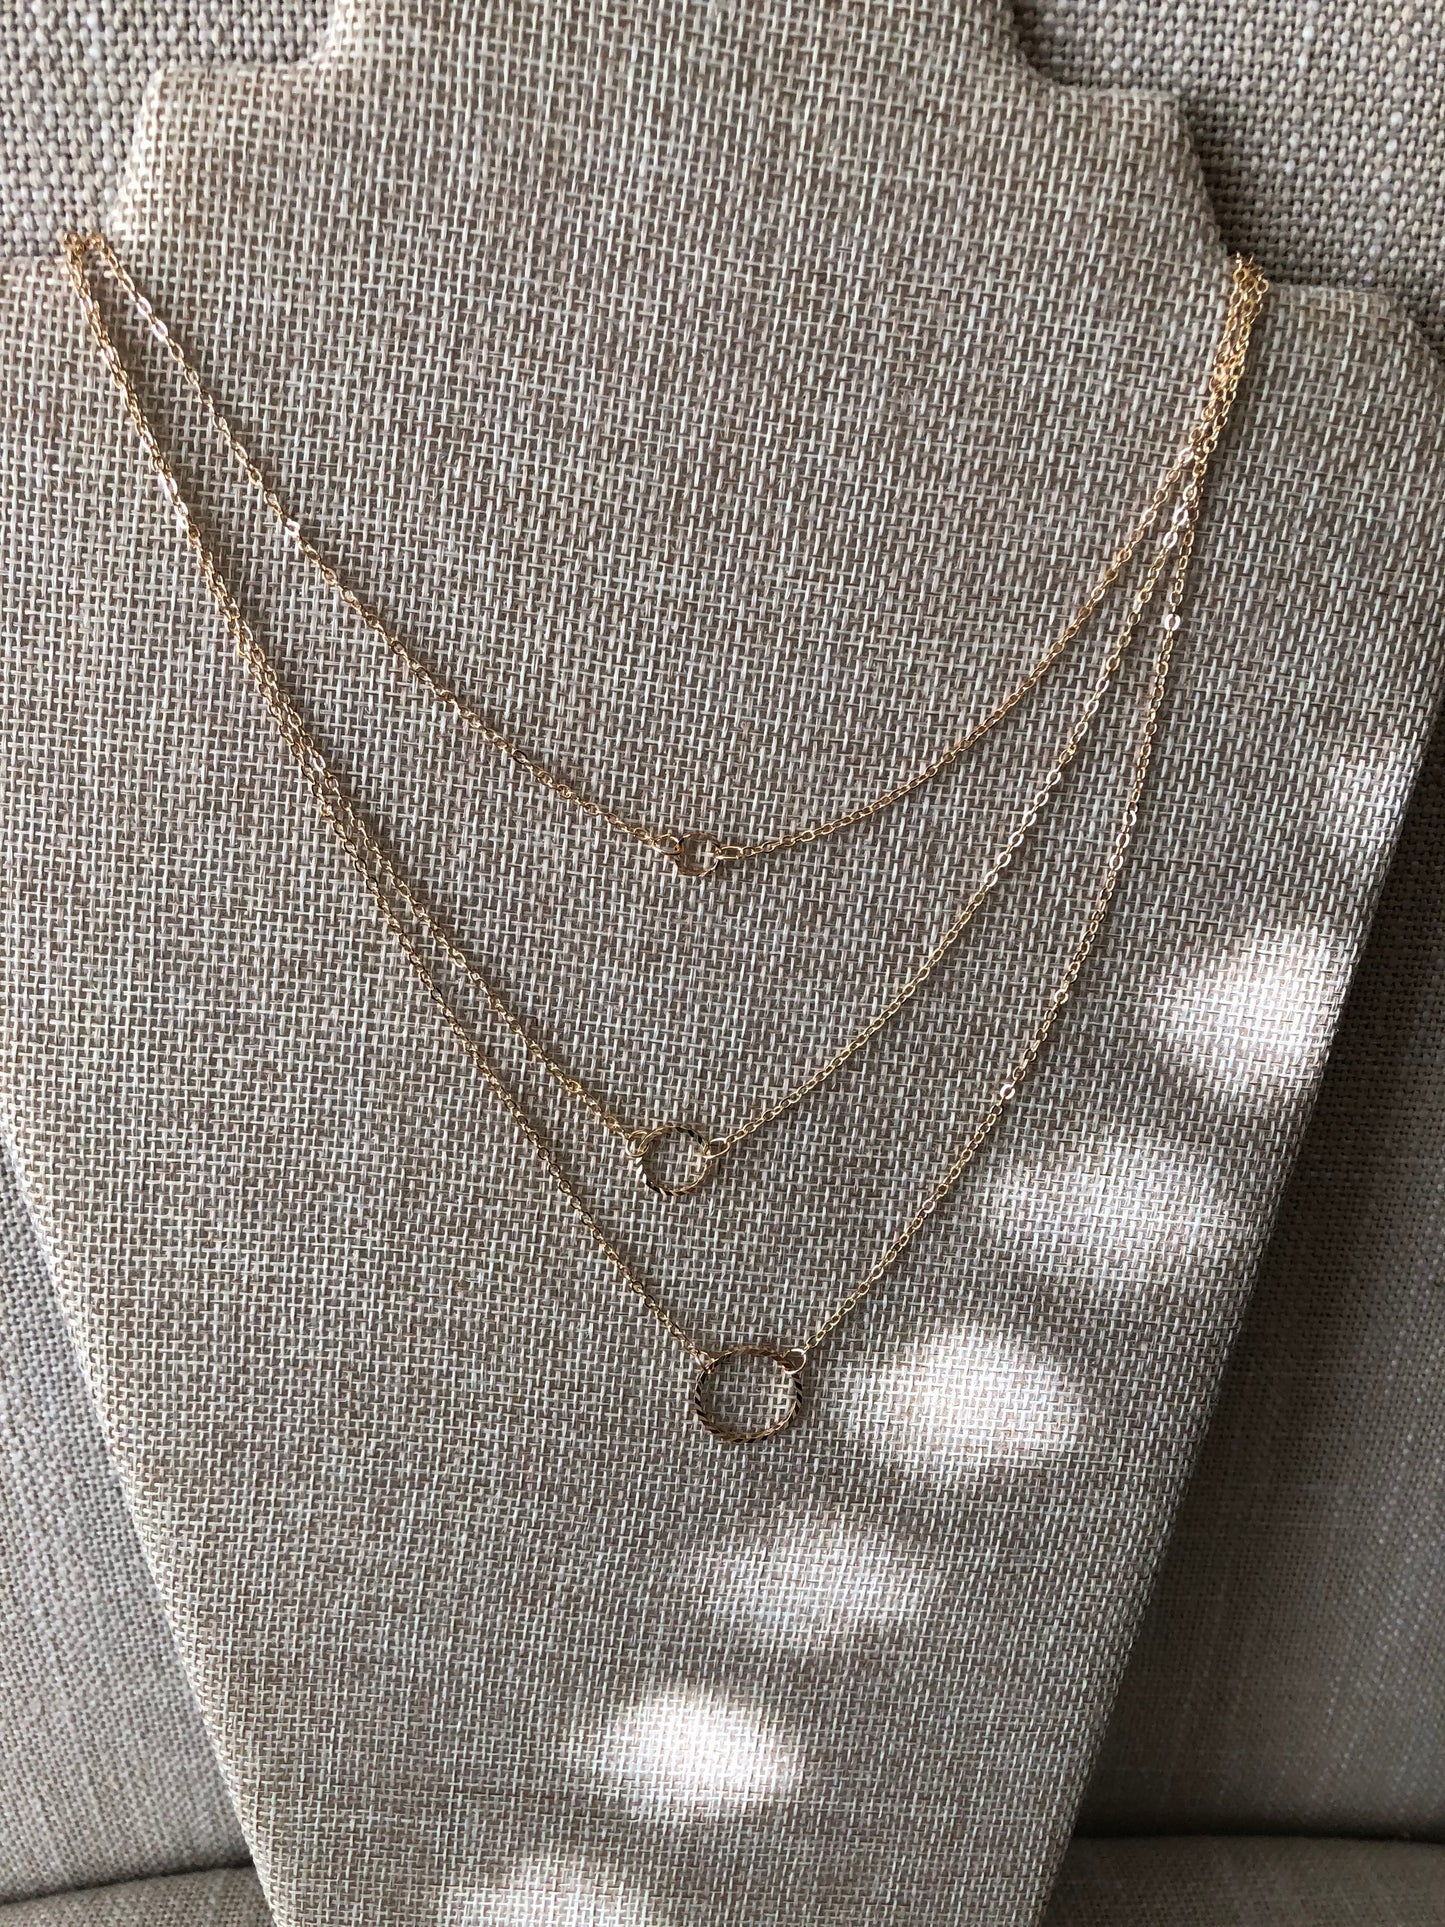 Triple strand gold necklace - Meraki B Shop